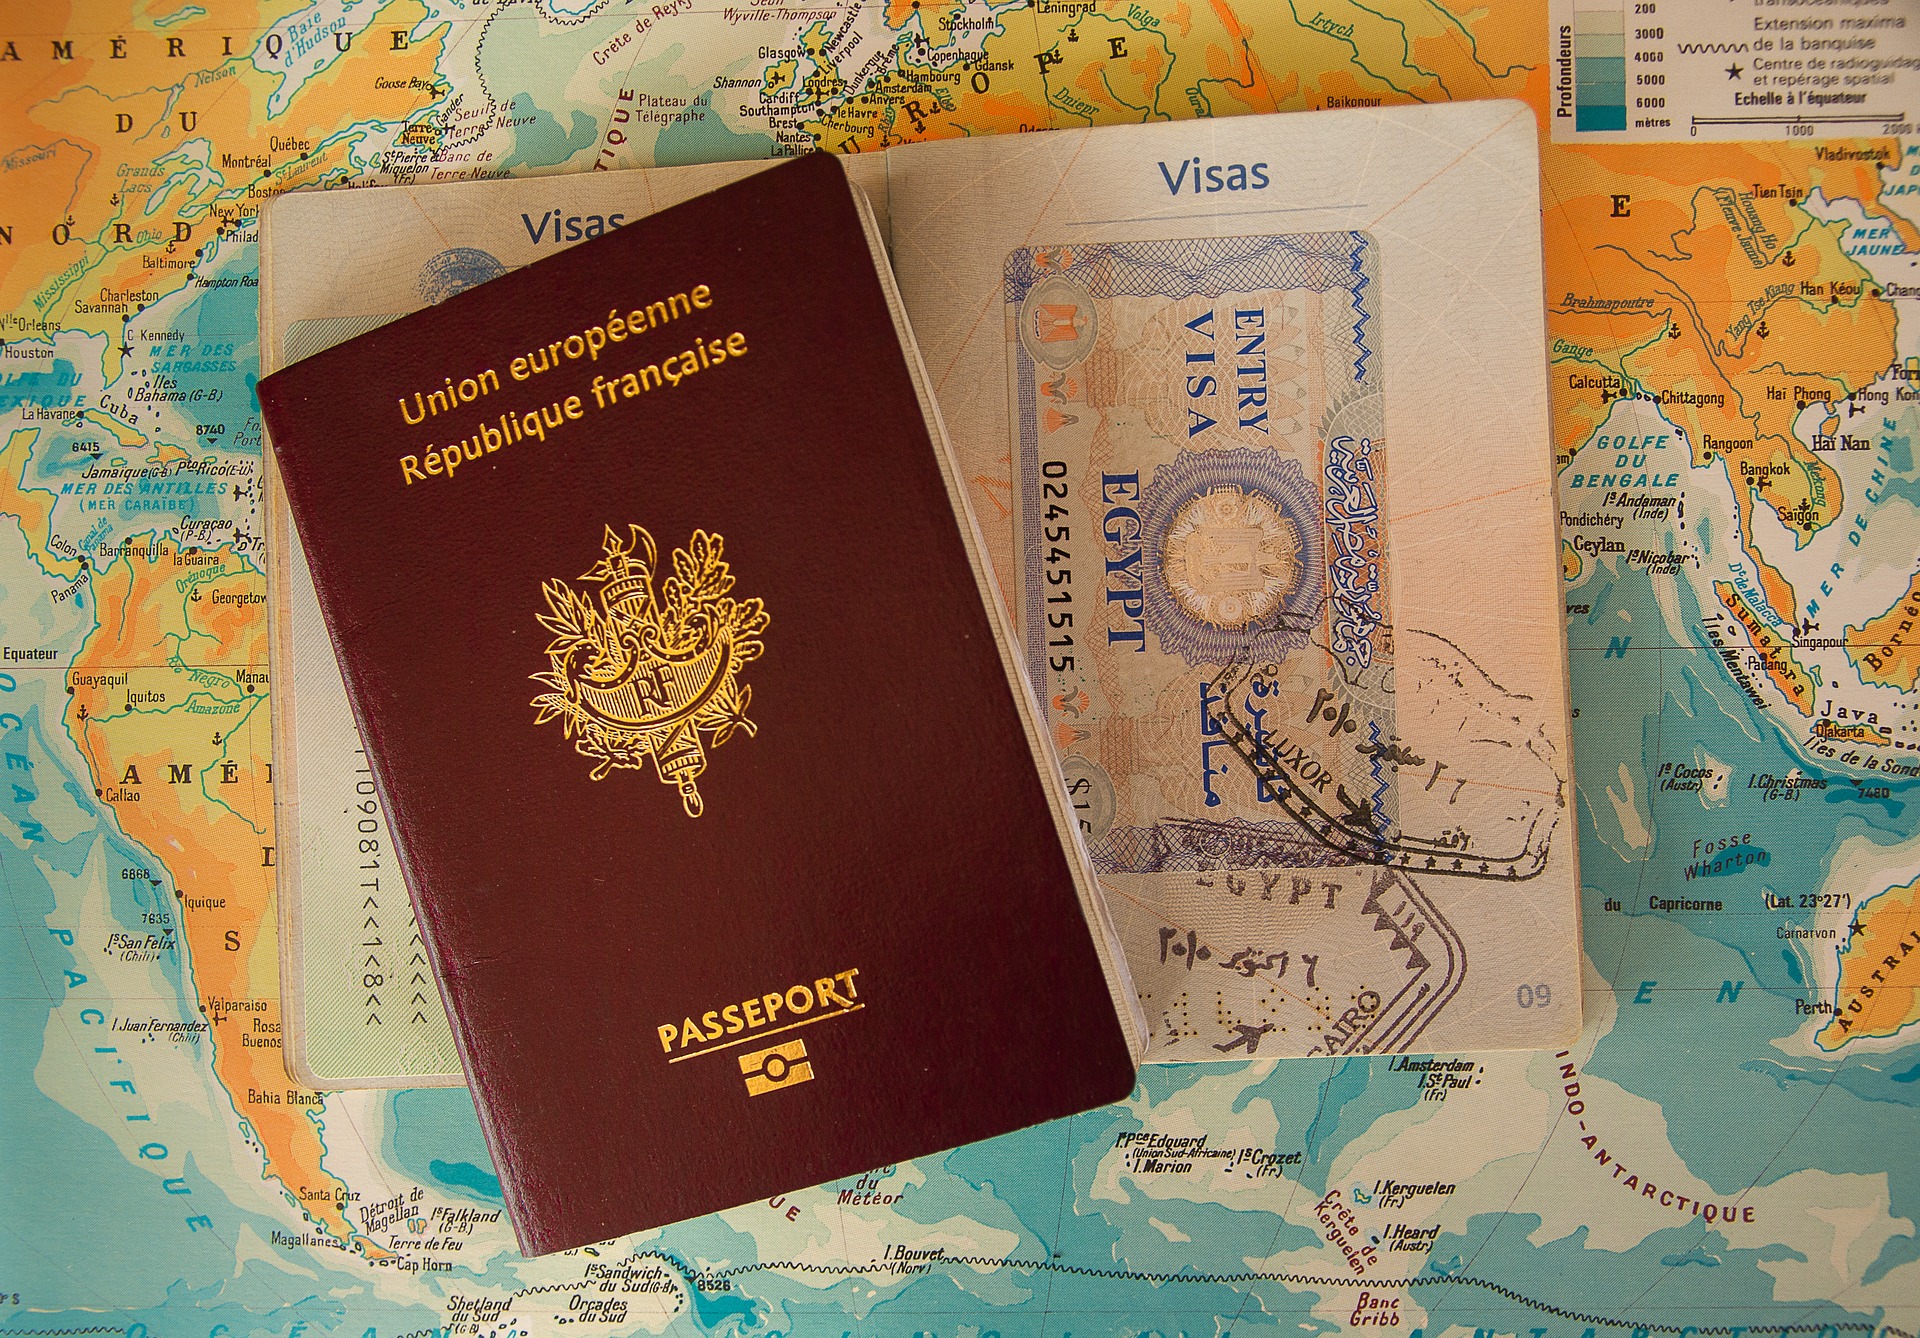 Passport on top of map